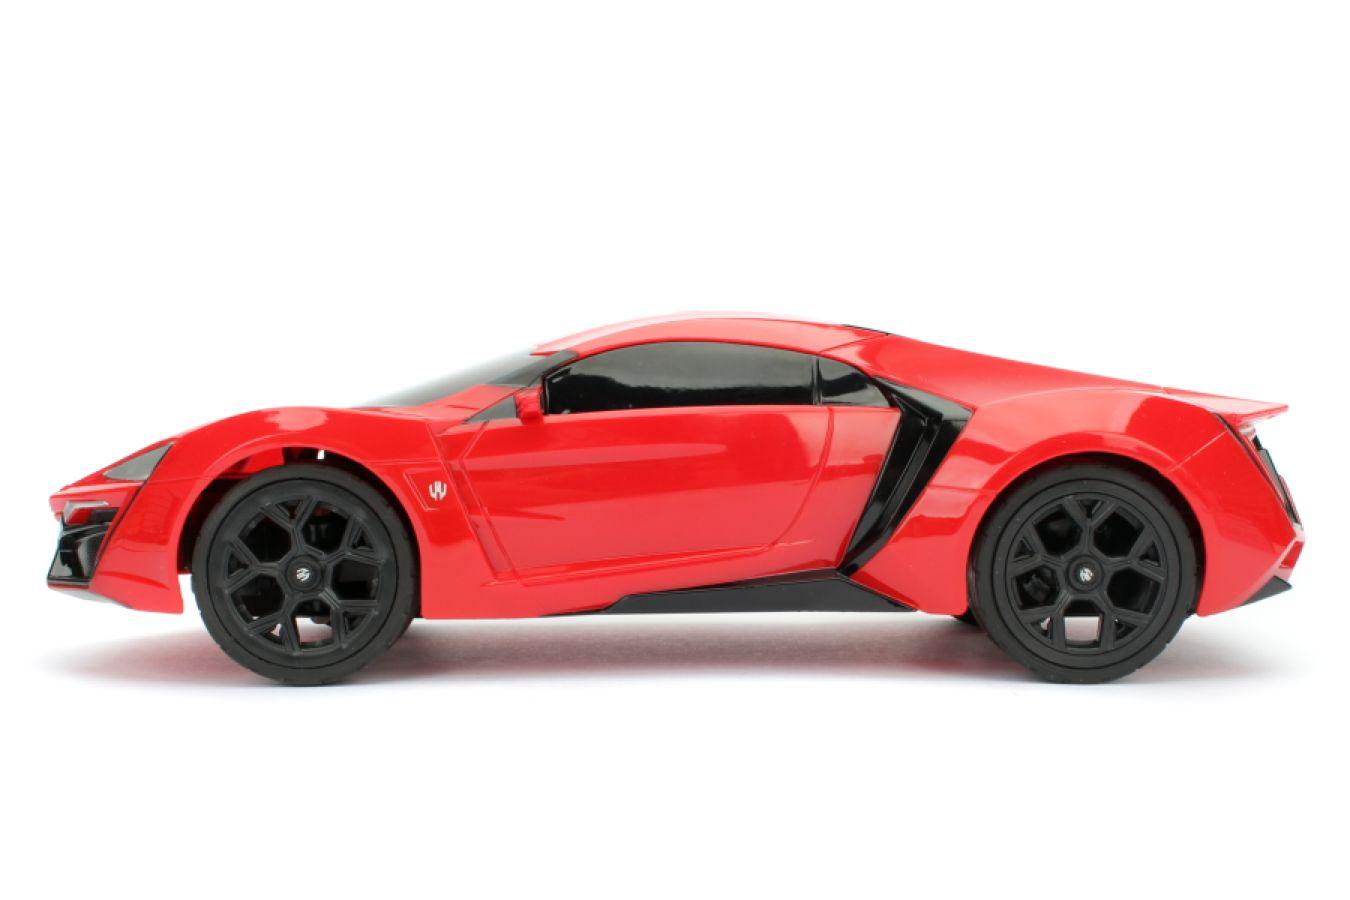 JAD98546 Fast & Furious - Lykan Hypersport 1:16 Scale Remote Control Car - Jada Toys - Titan Pop Culture